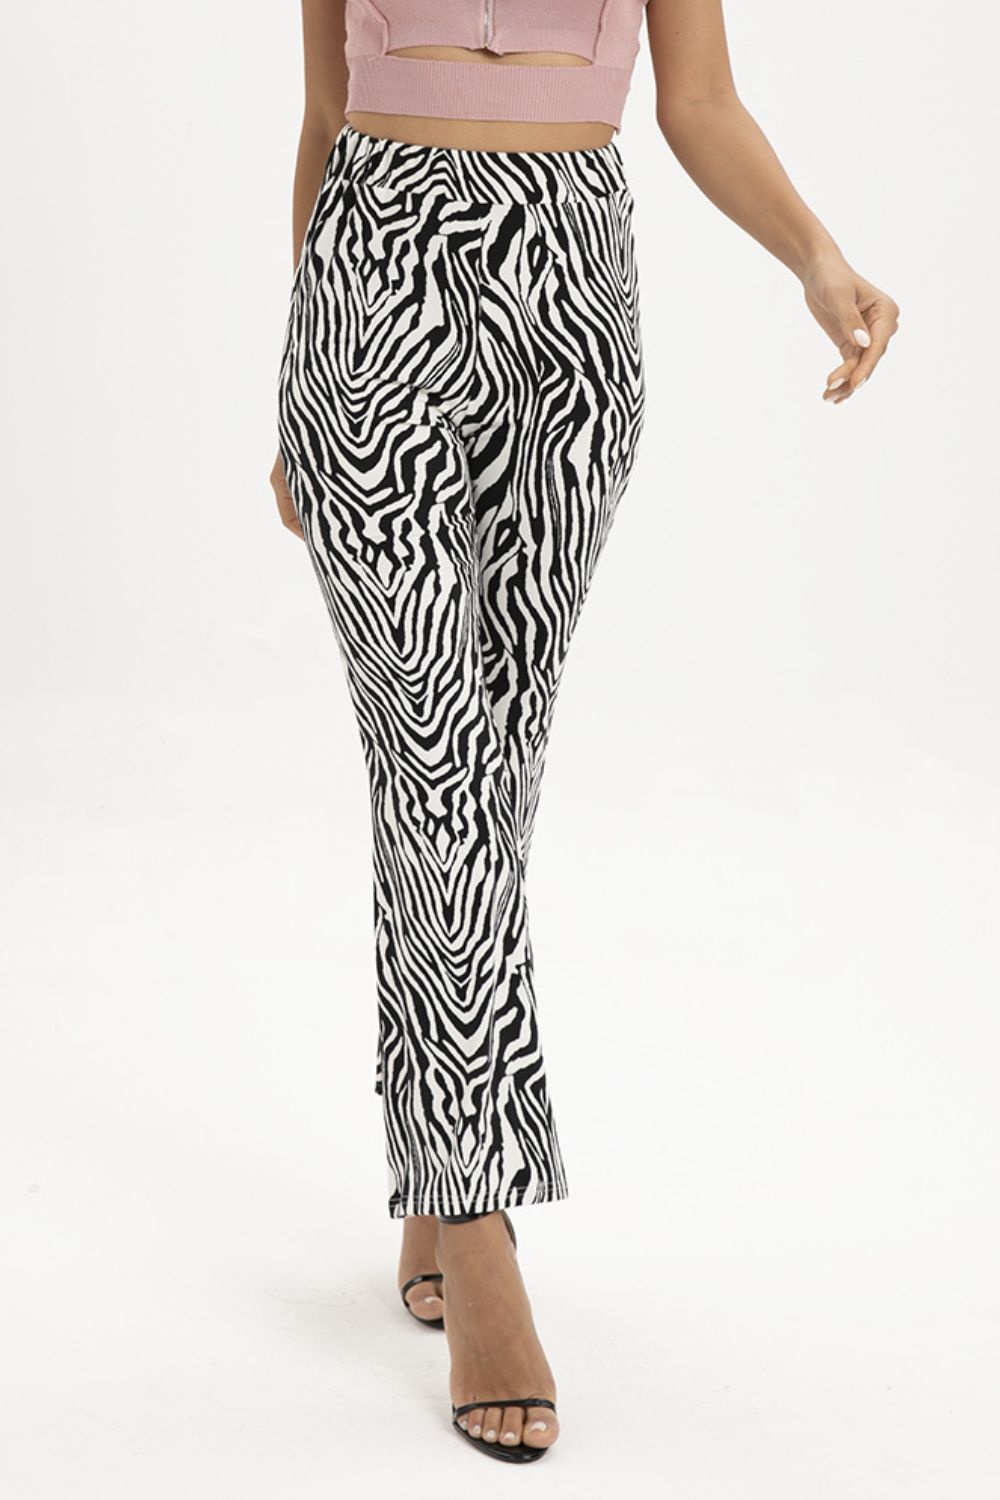 Zebra Print Straight Leg Pants - women's pants at TFC&H Co.